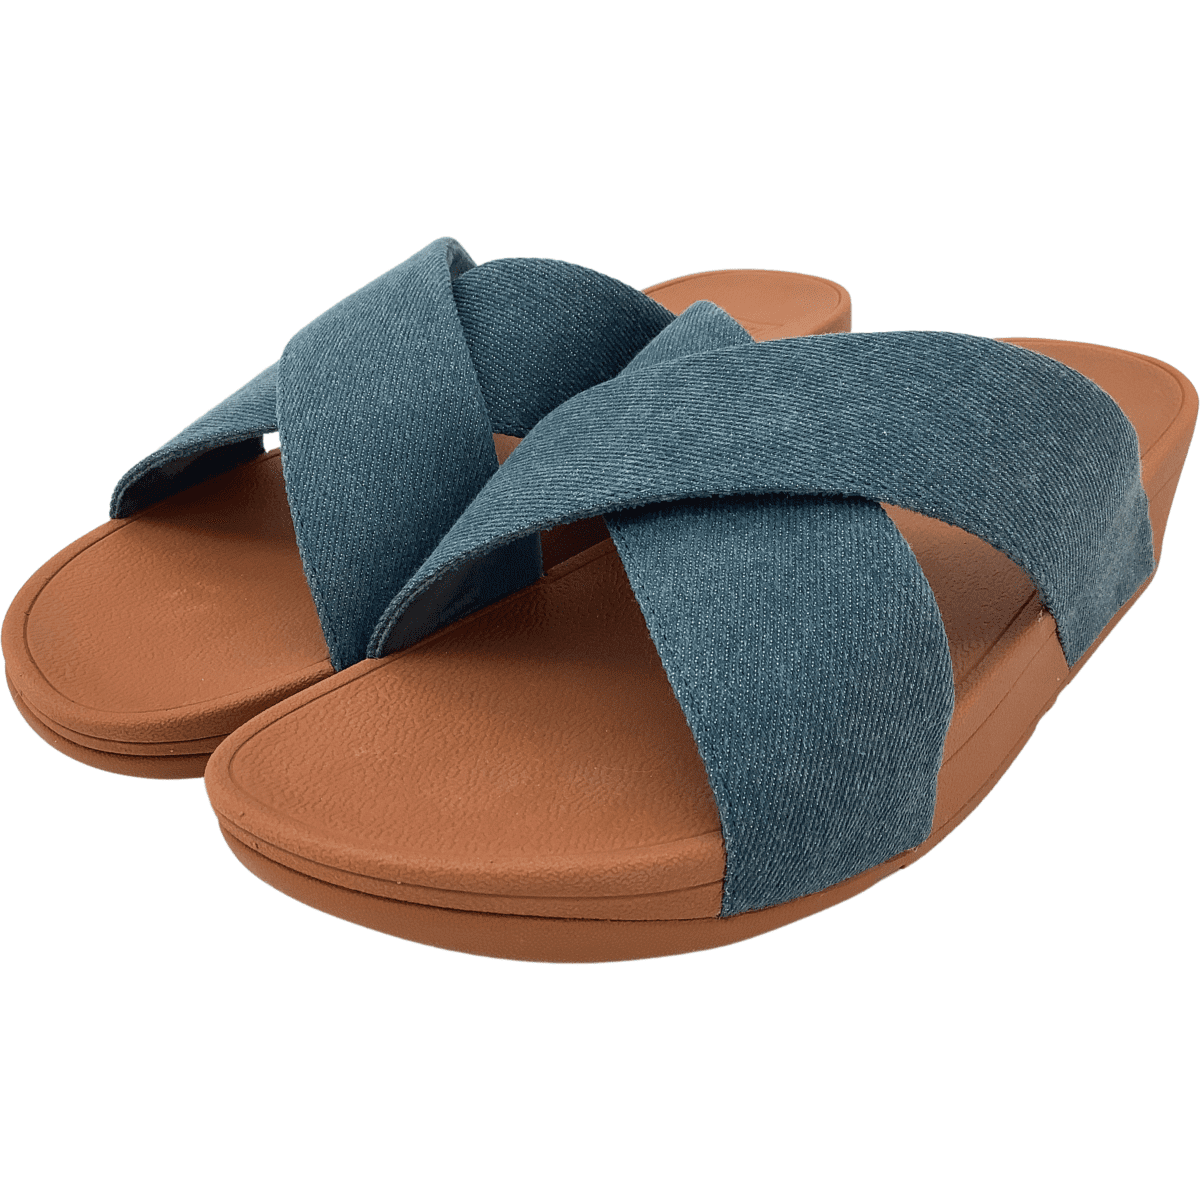 FitFlop Women’s Sandals / Brown and Denim / Women’s Flip Flops / Size 9